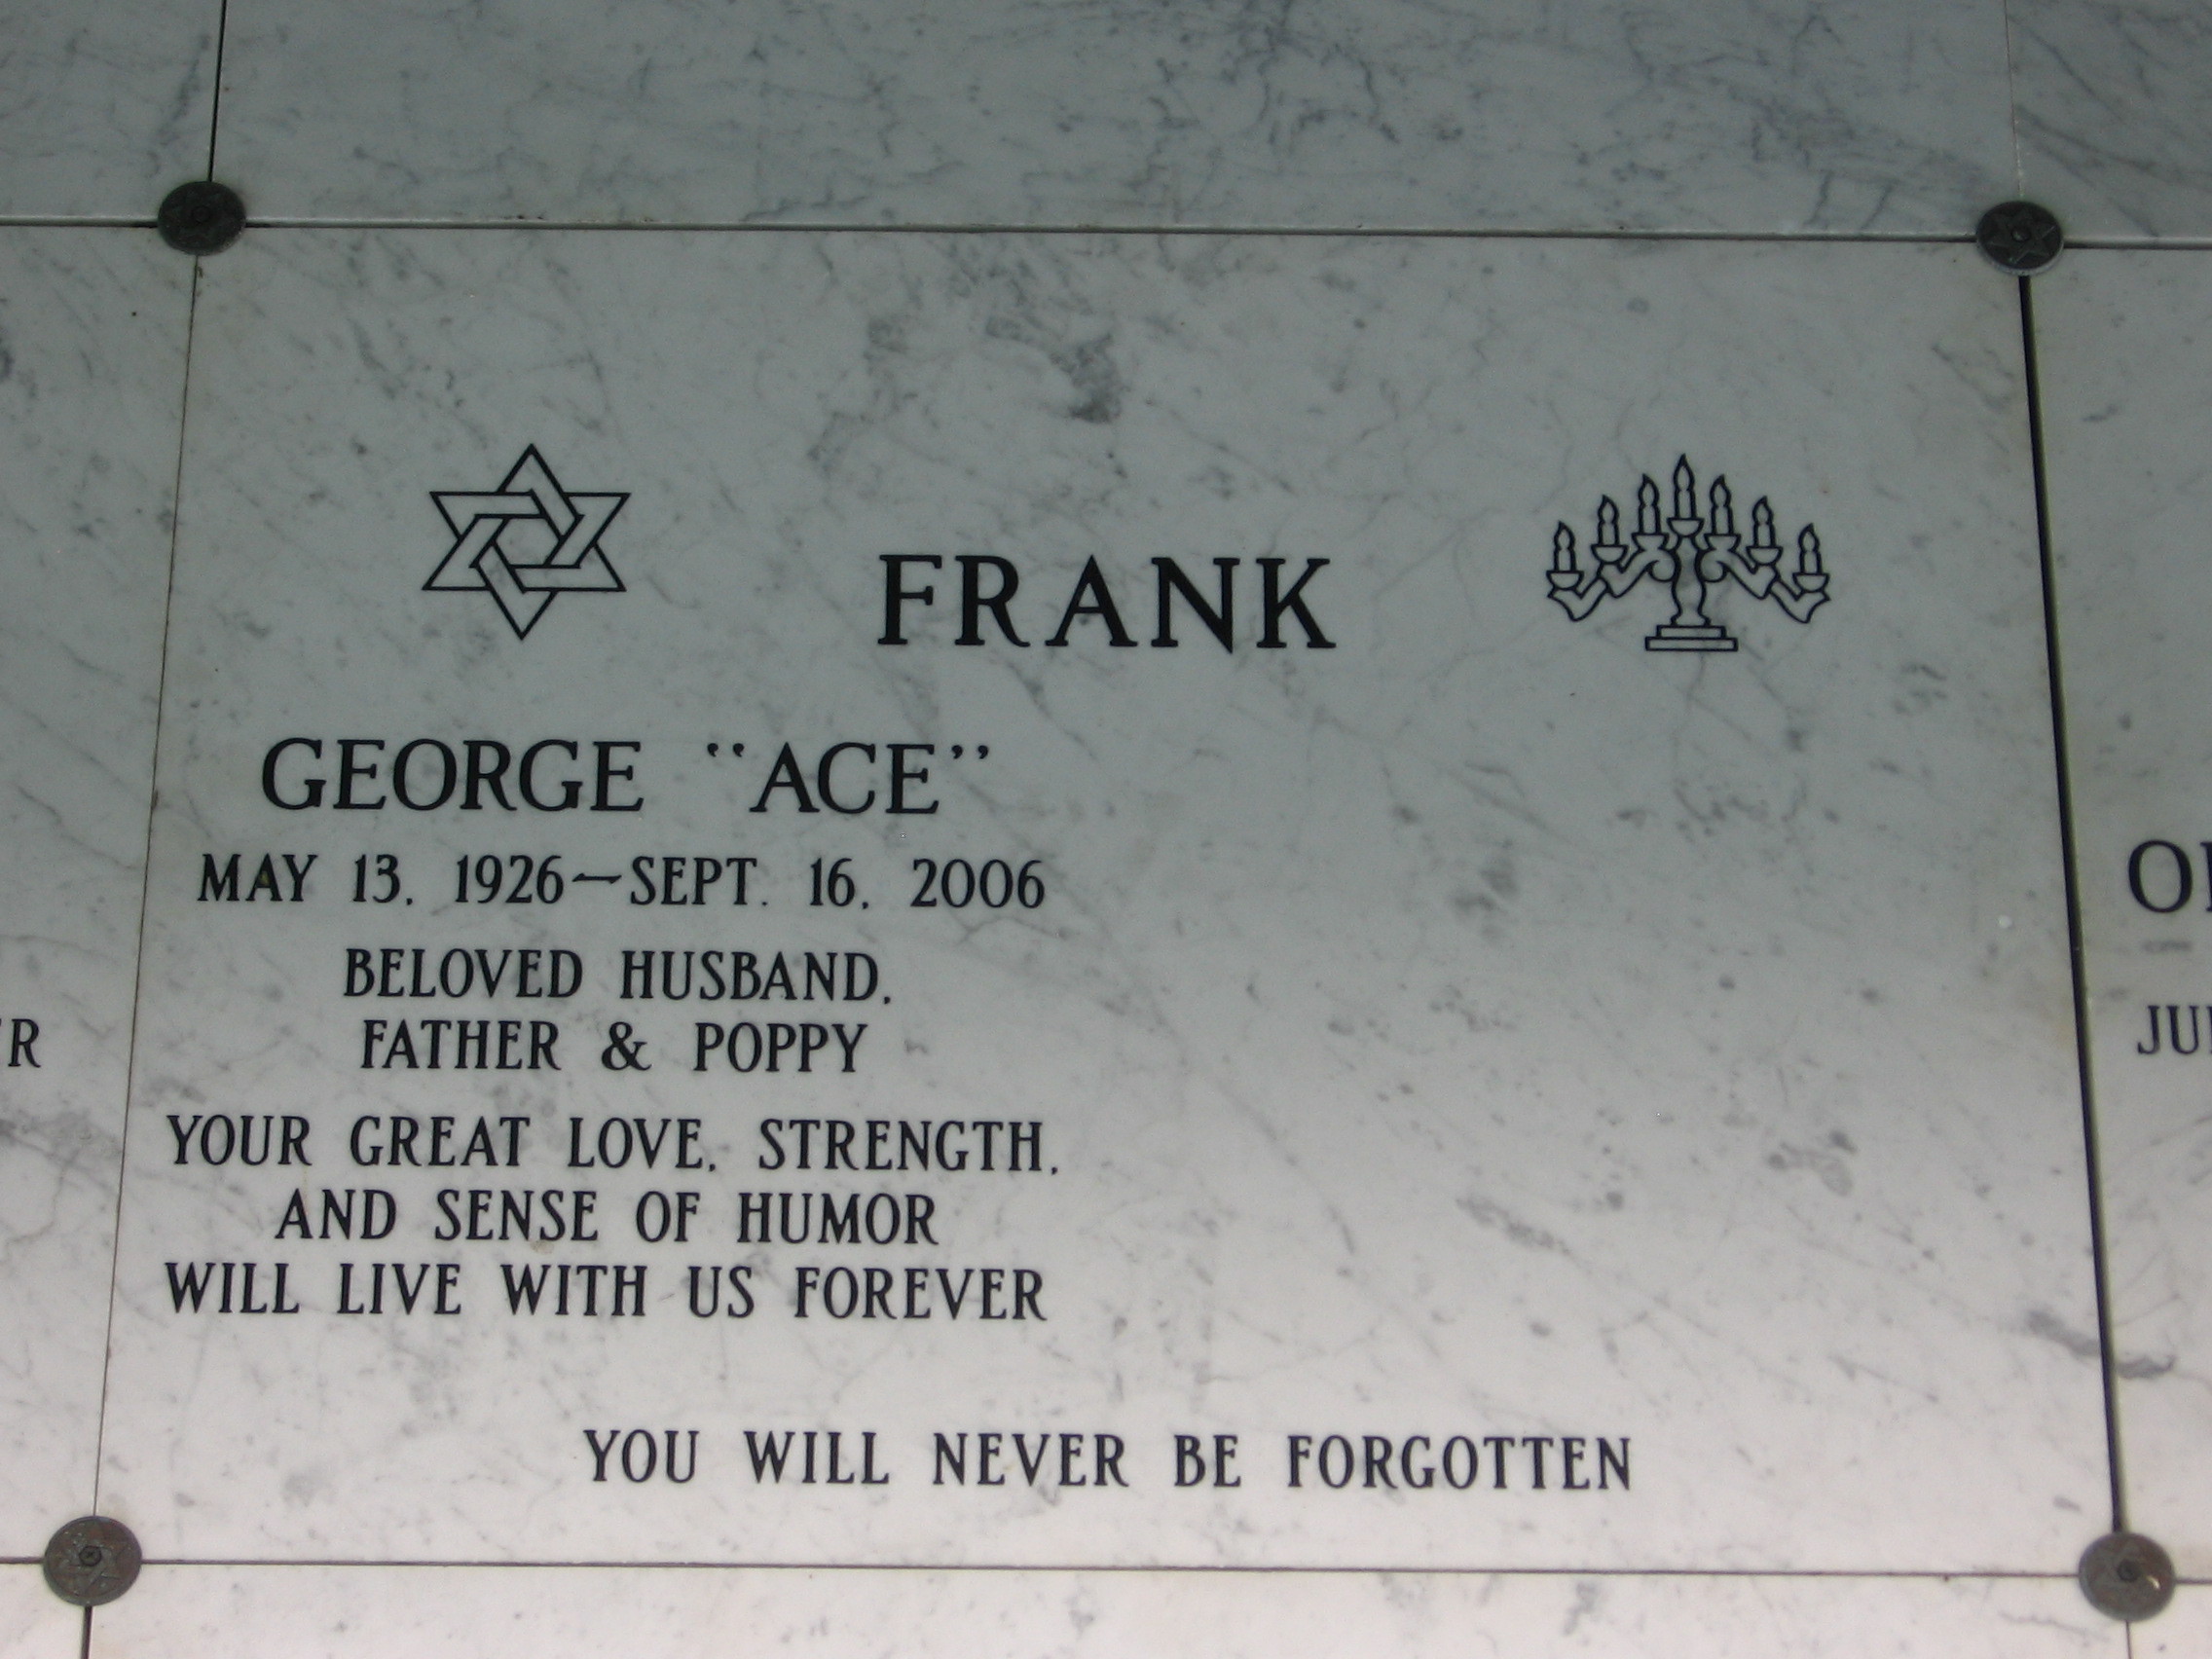 George "Ace" Frank